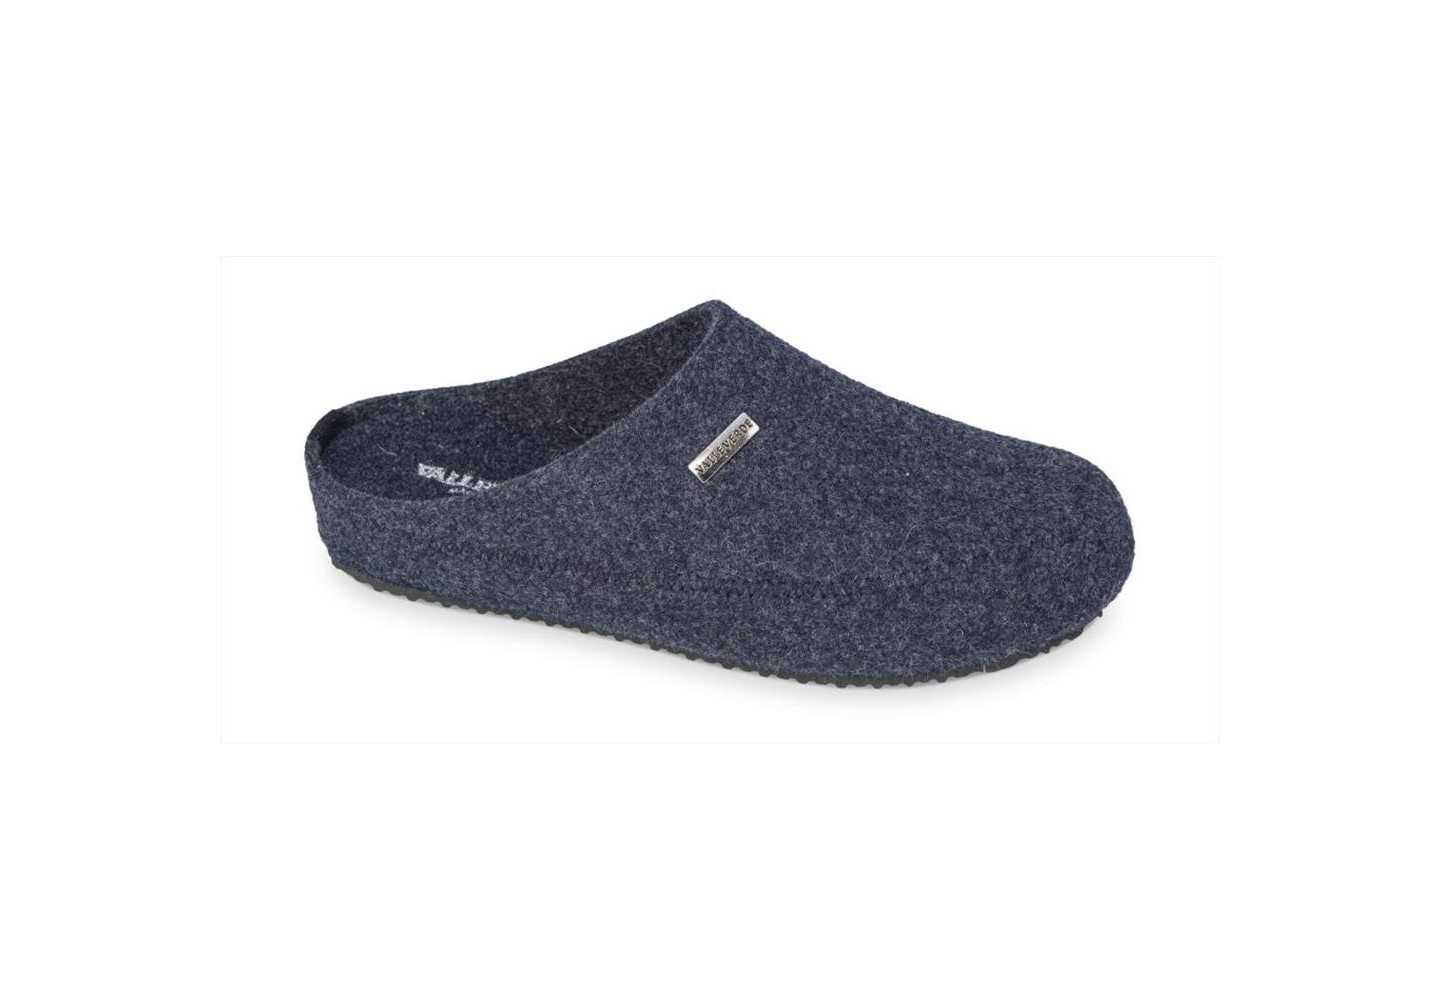 Pantofole calde da uomo in lana cotta Valleverde 55850 jeans